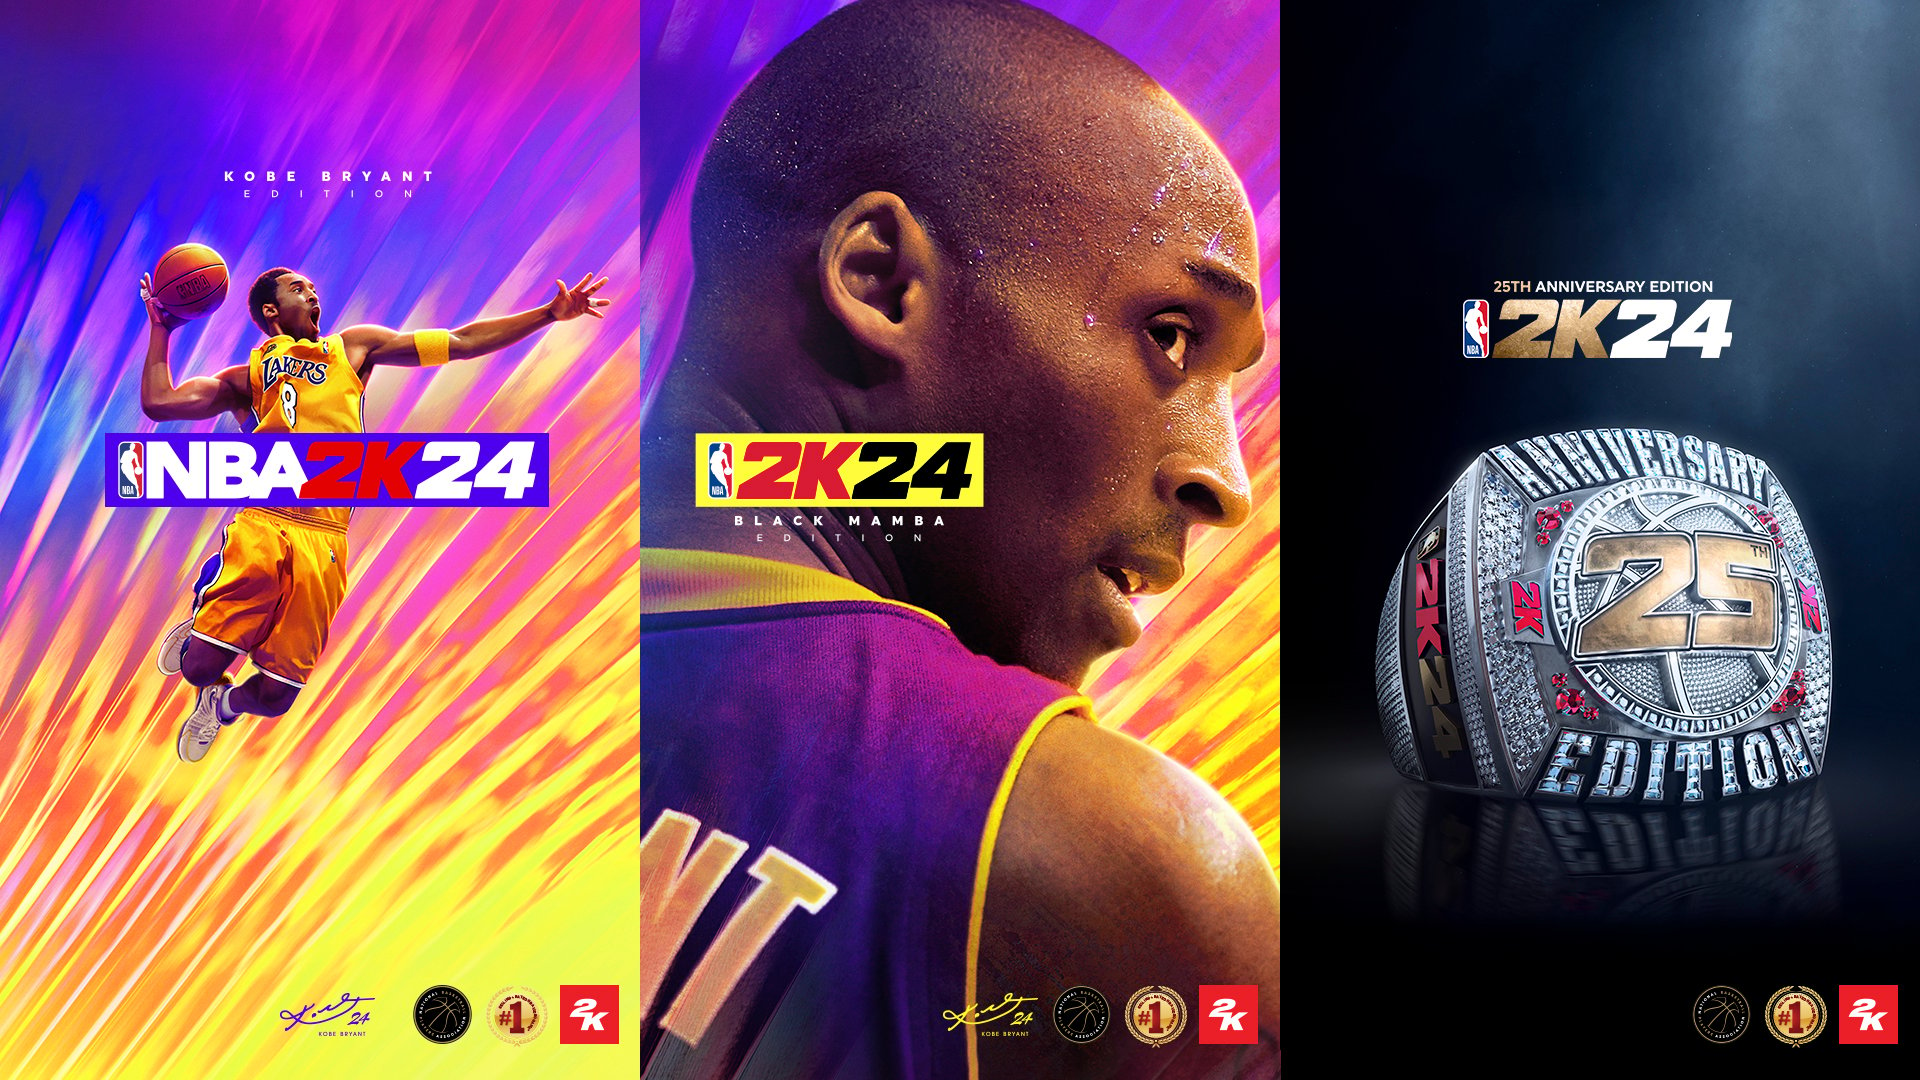 NBA 2K Mobile codes October 2023